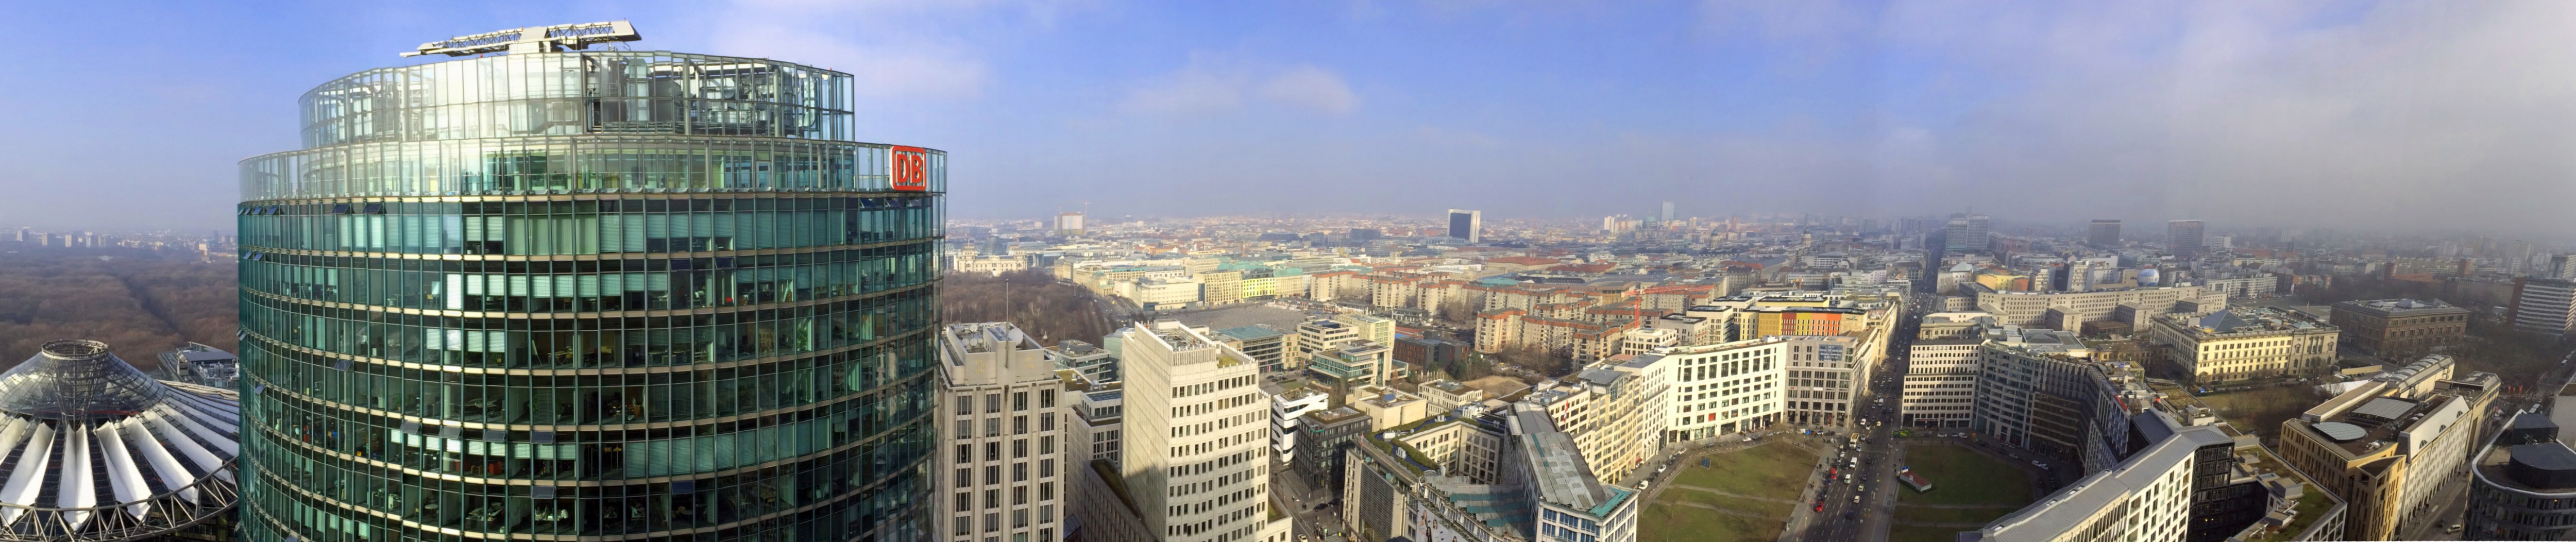 Berlin Panorama am Potsdamerplatz 1